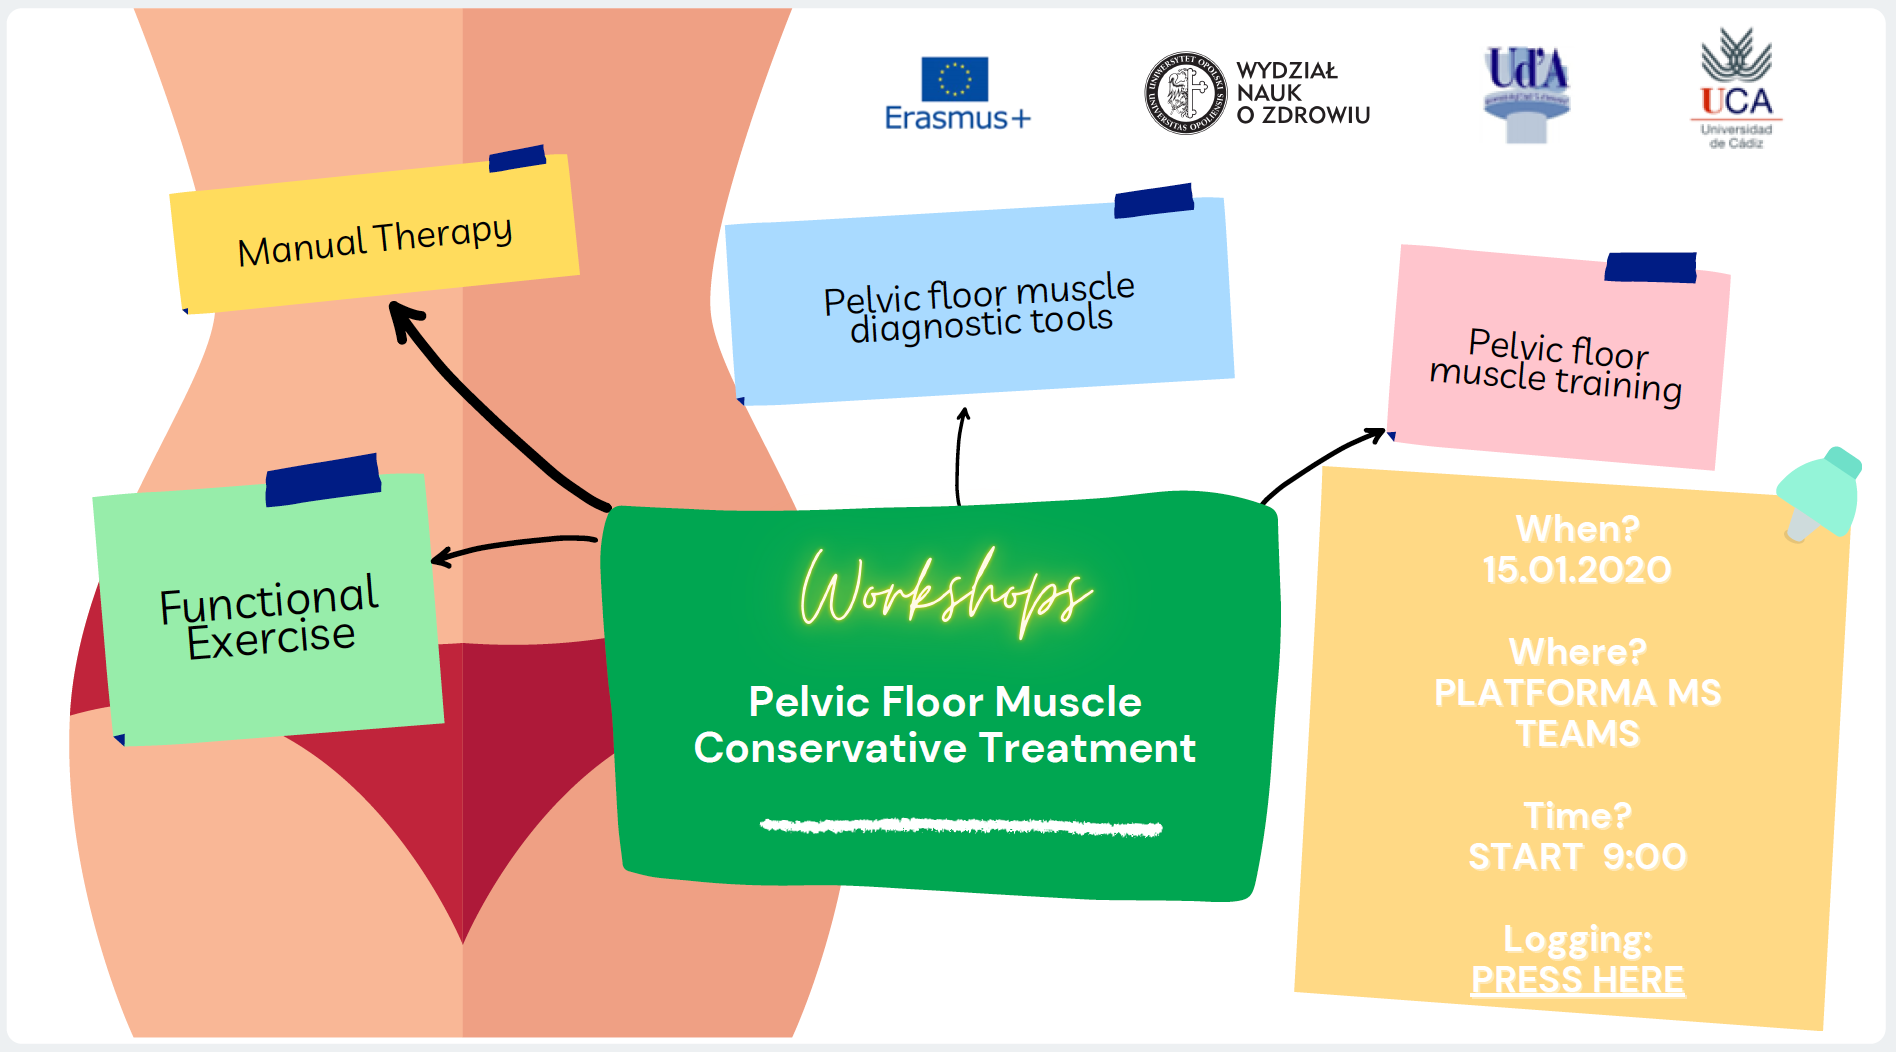 Workshop ‘Pelvic Floor Muscle Conservative Treatment”